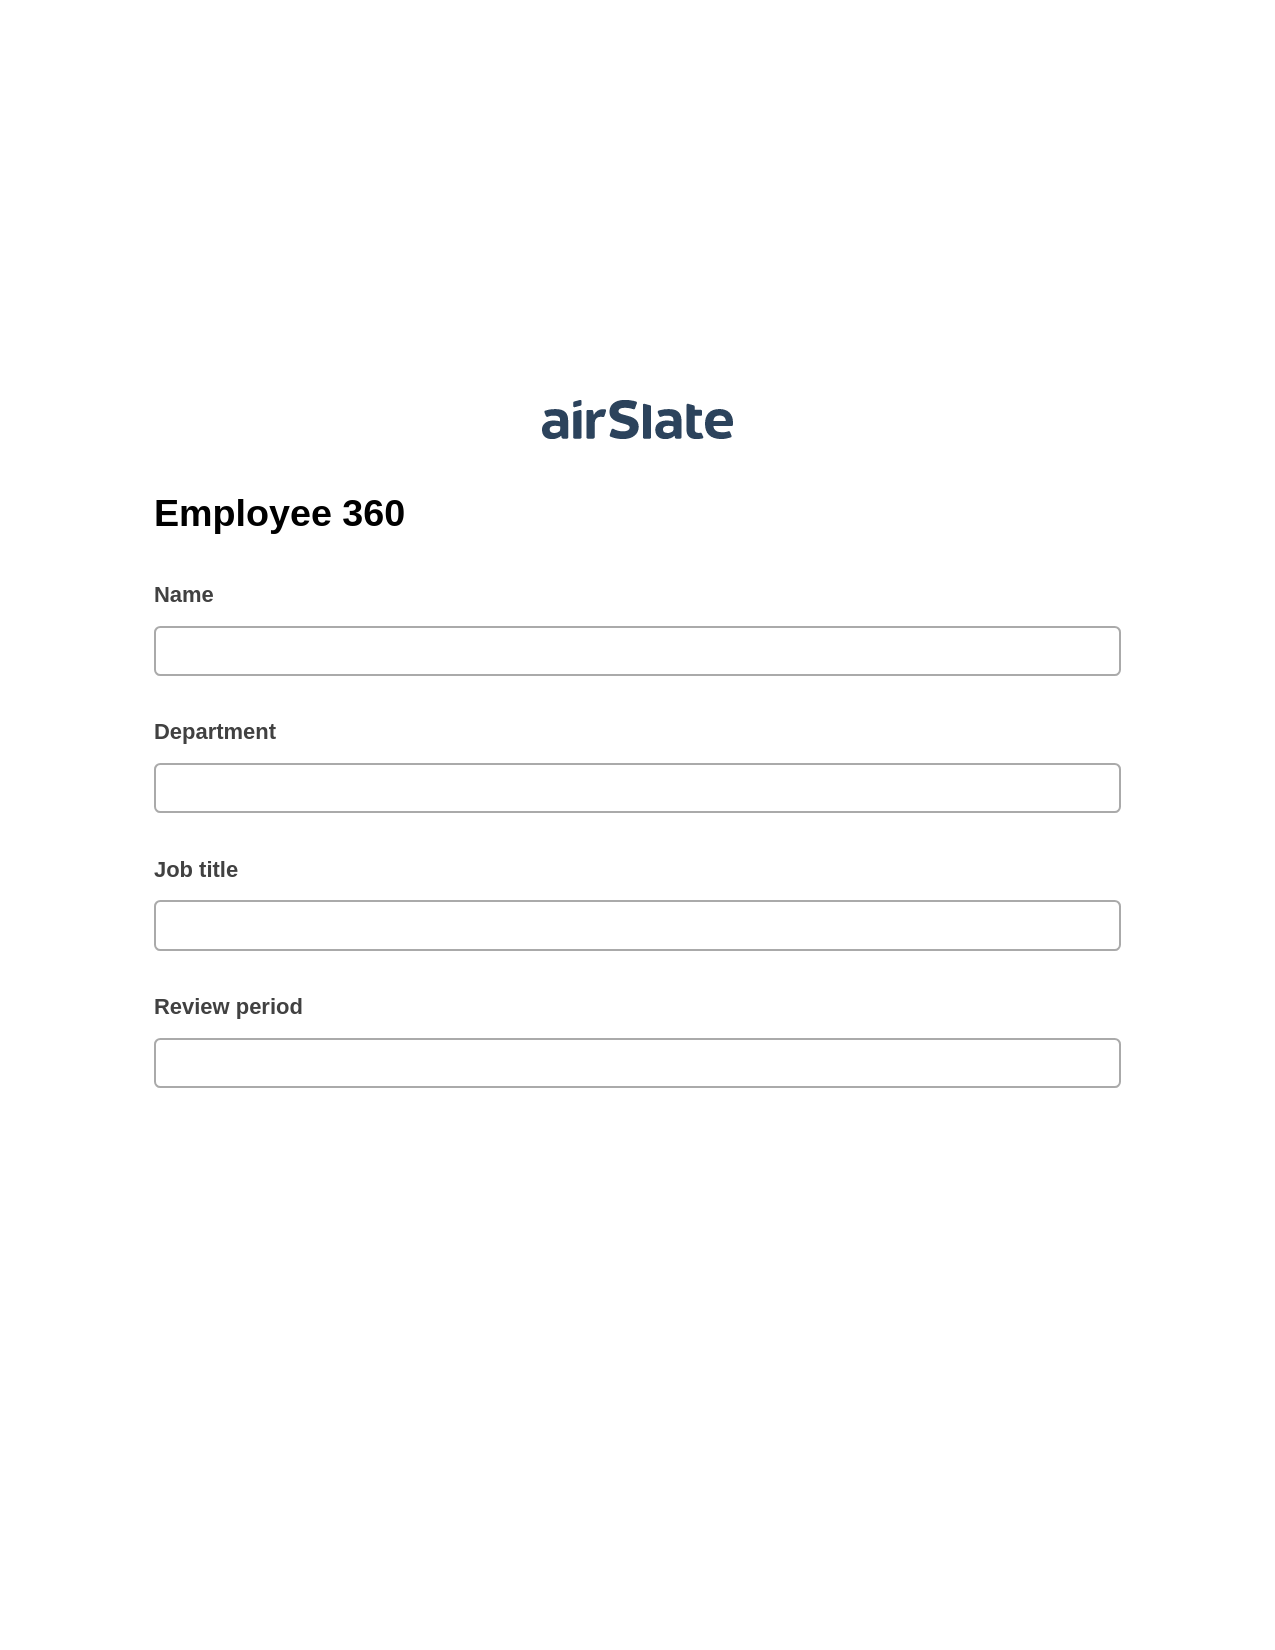 Multirole Employee 360 Pre-fill from Google Sheets Bot, Remove Slate Bot, Webhook Postfinish Bot